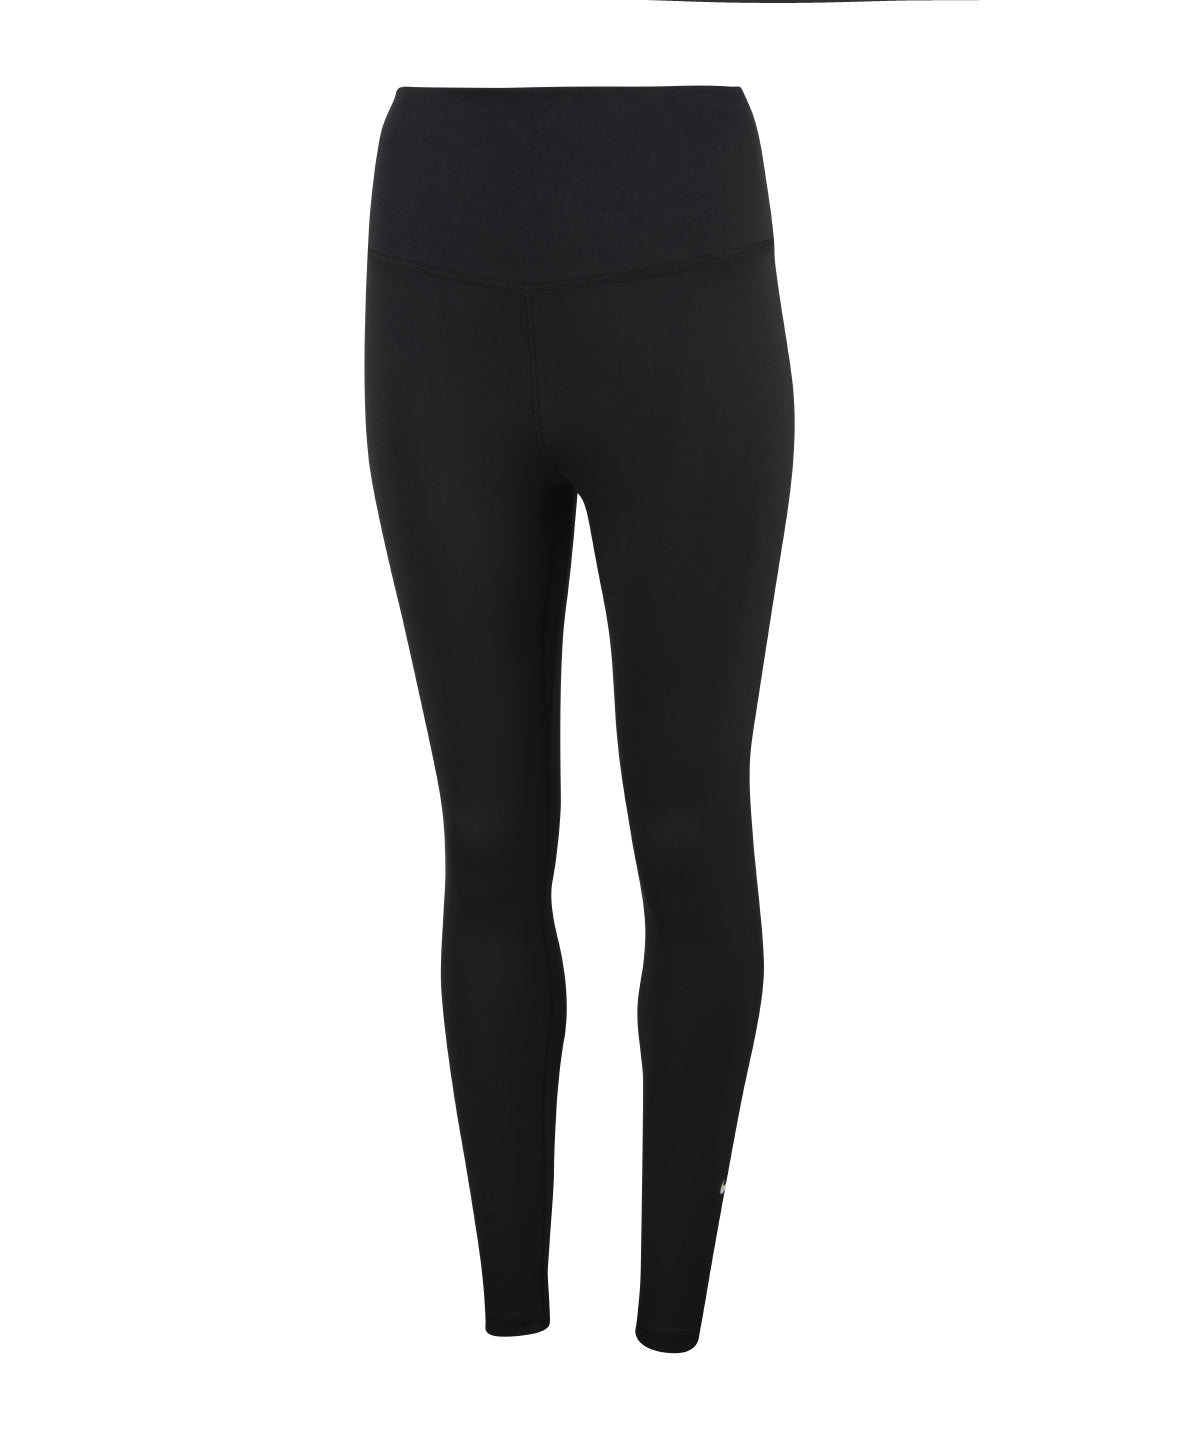 Nike Women’s One Dri-FIT high-rise leggings